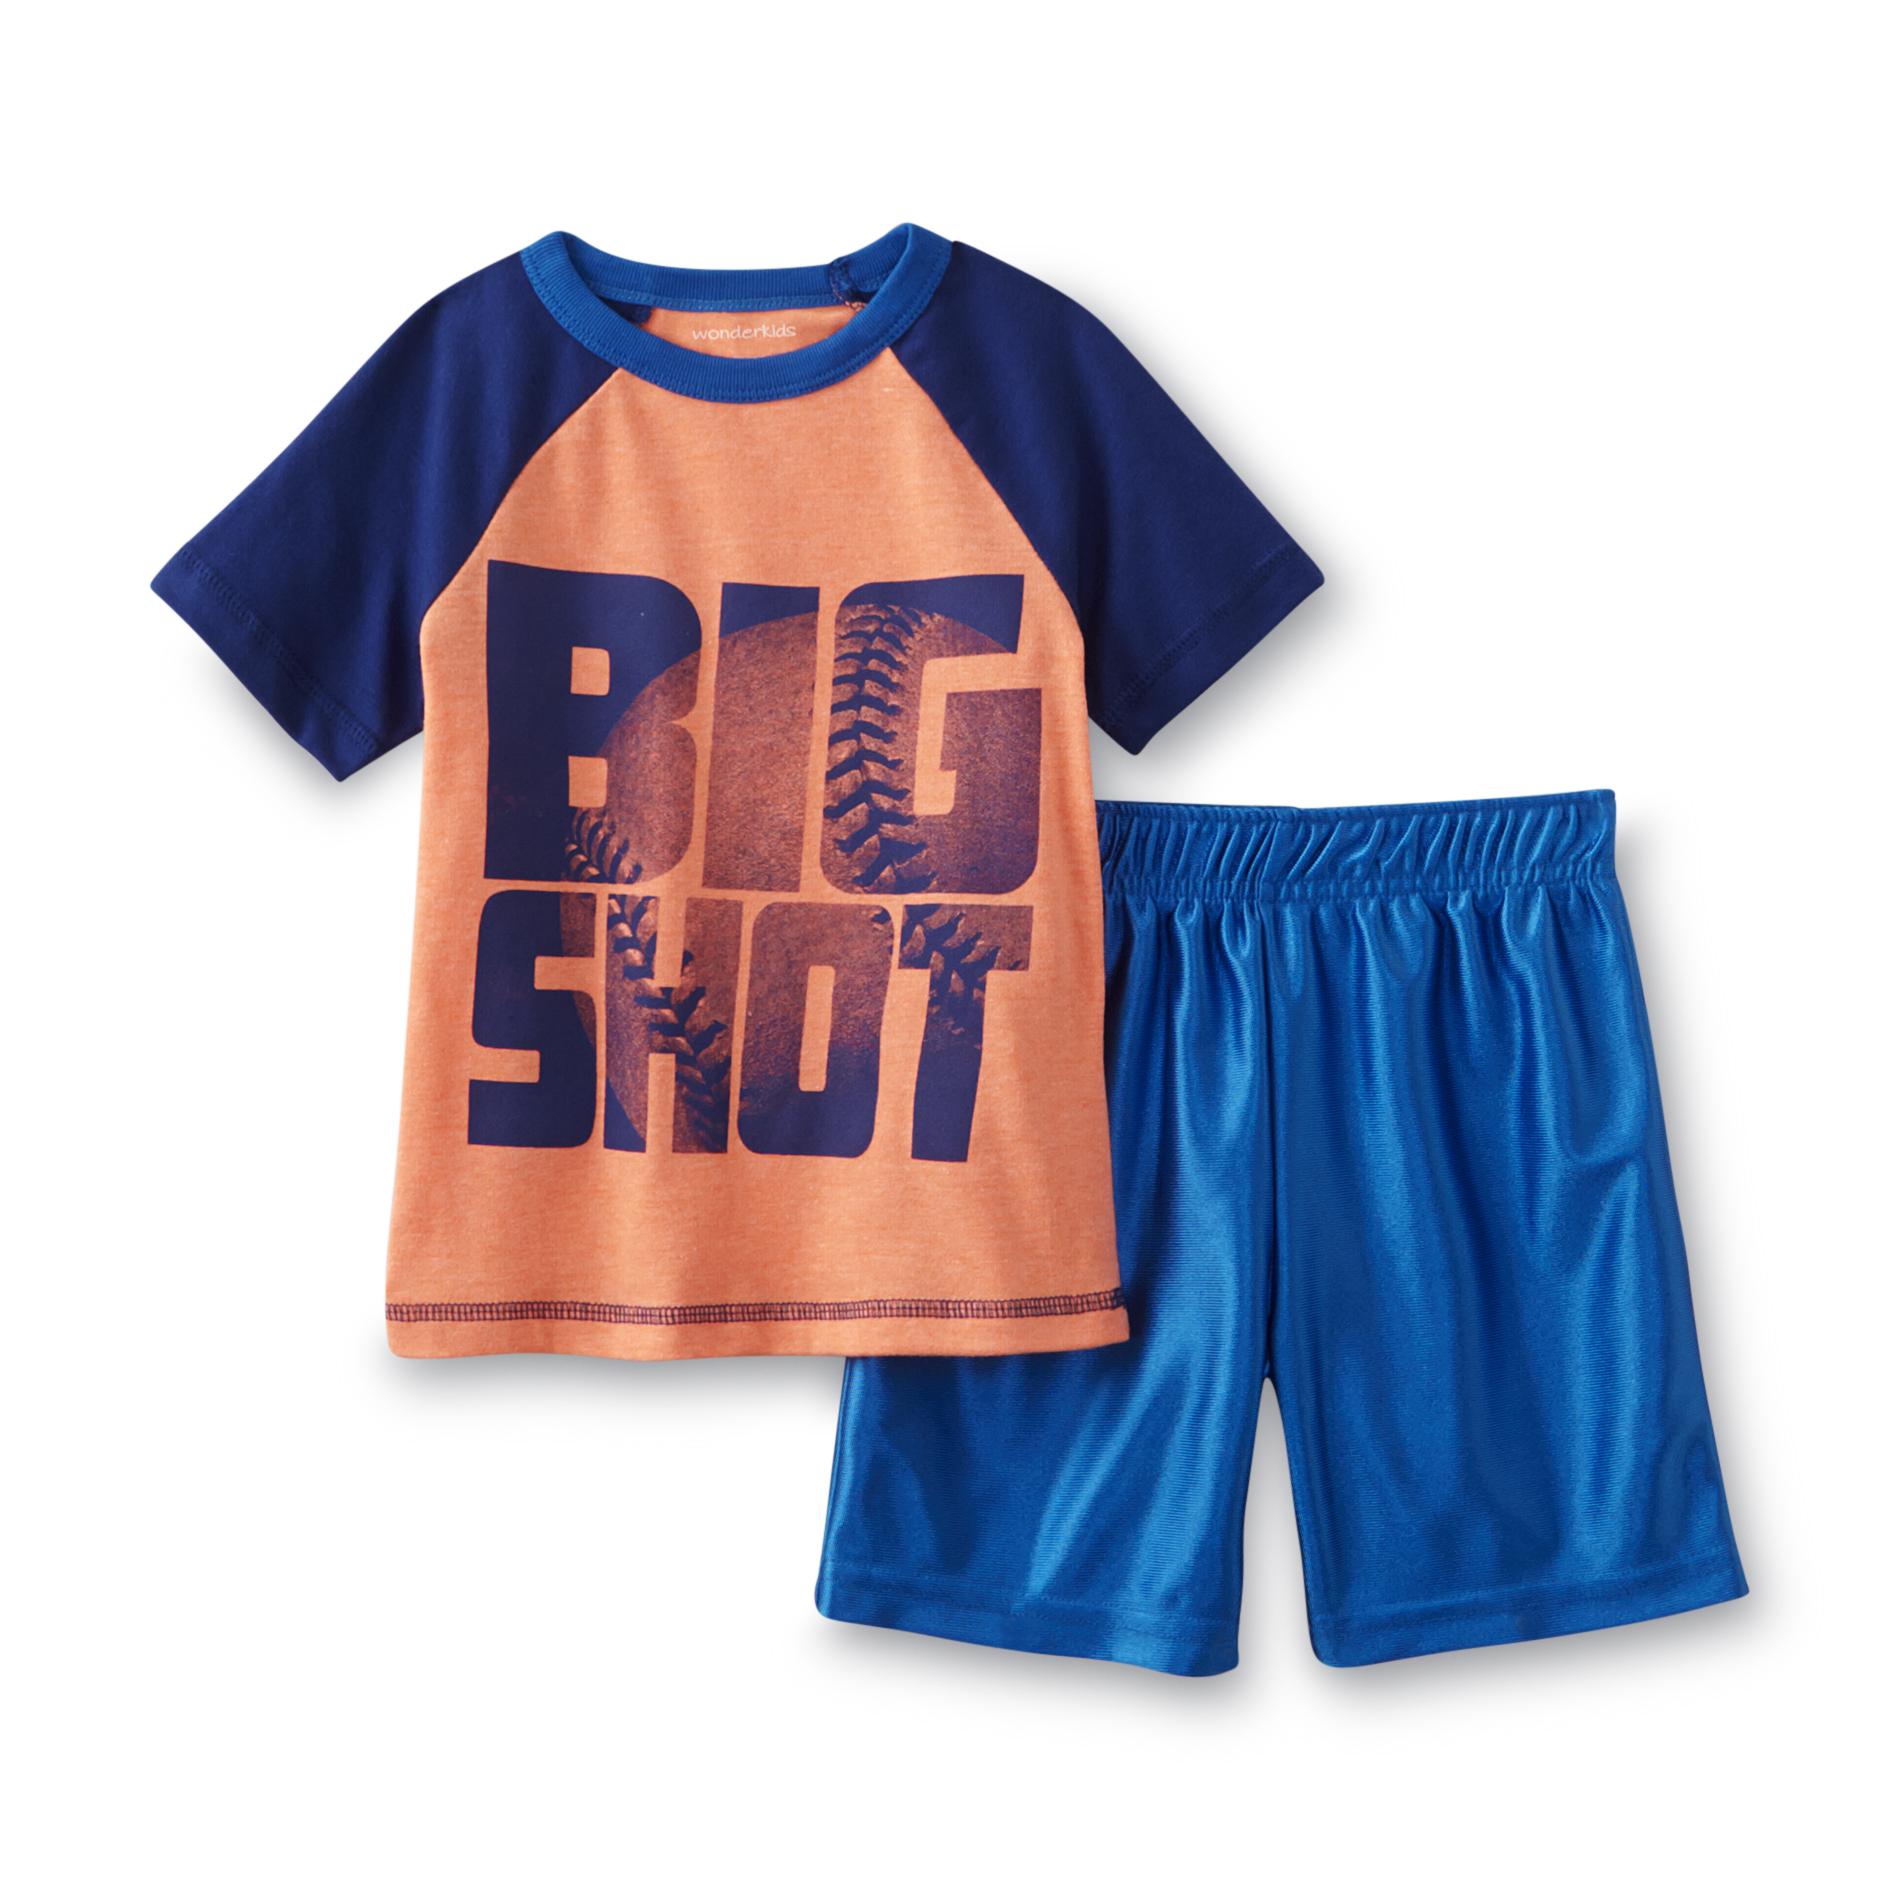 Infant & Toddler Boy's Graphic T-Shirt & Athletic Shorts - Big Shot